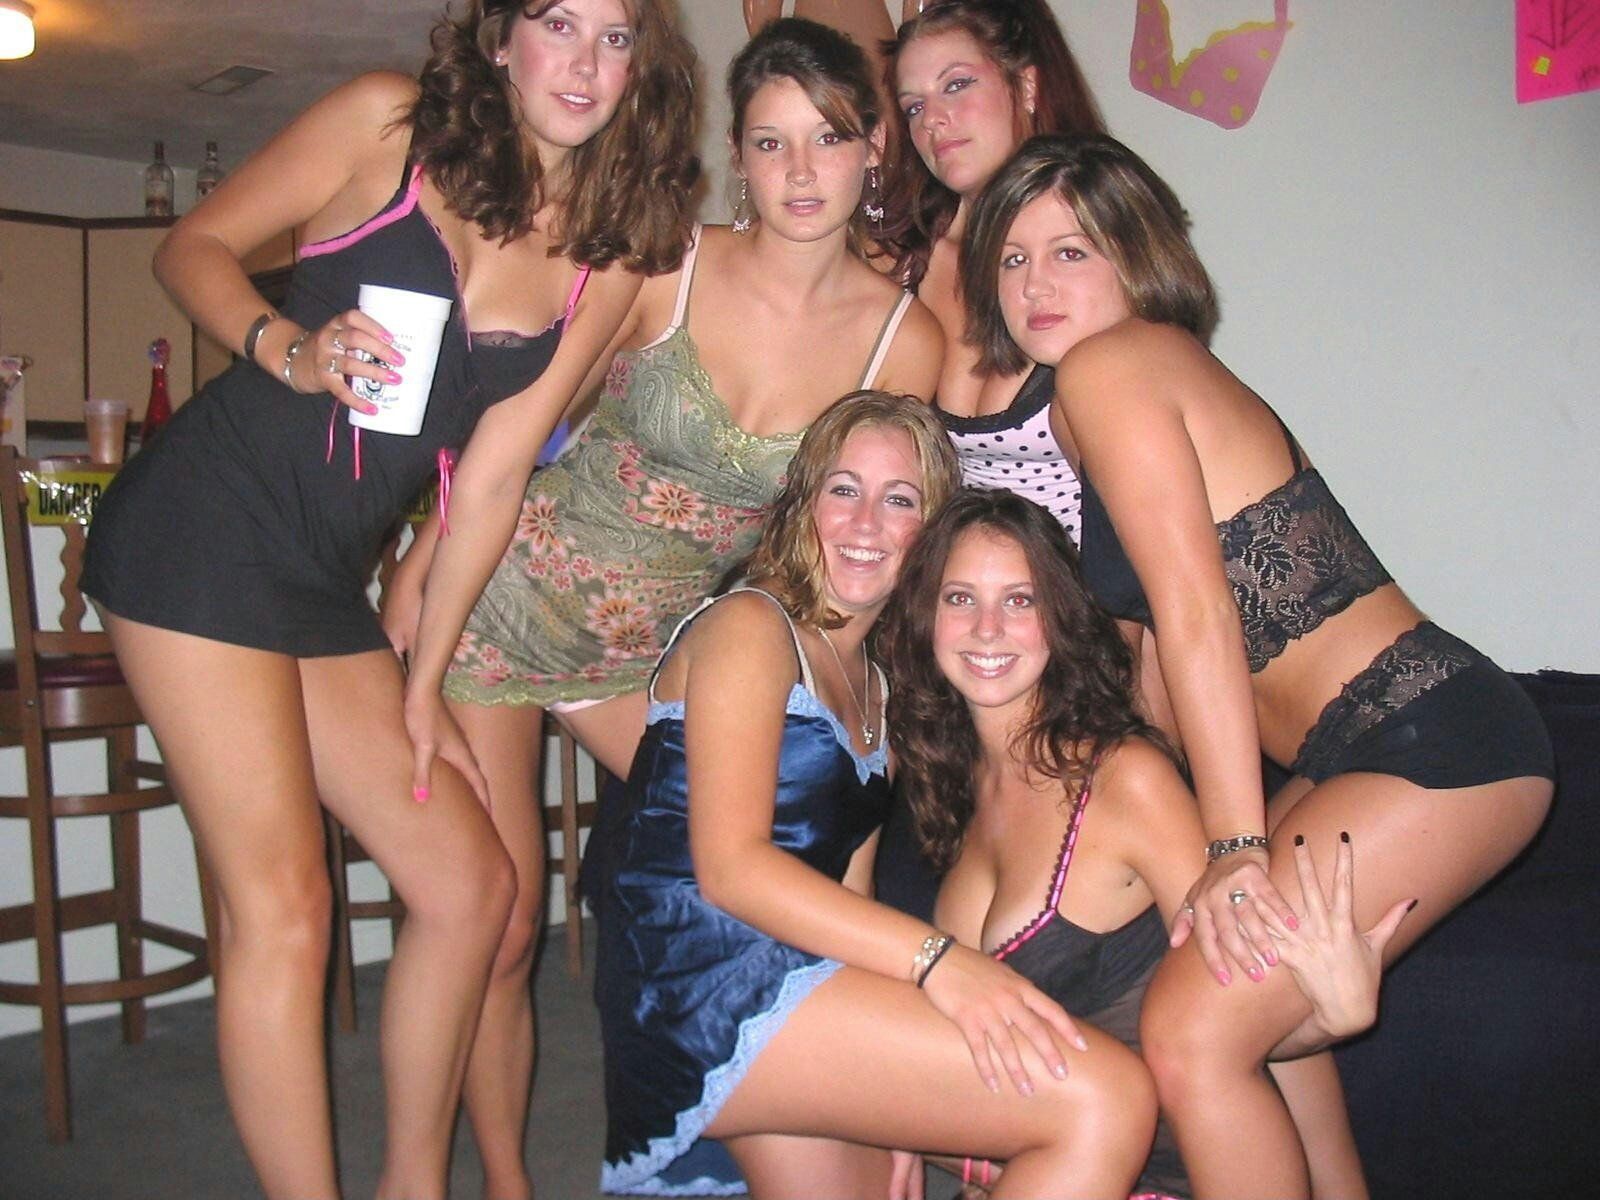 Girls nude at pajama party